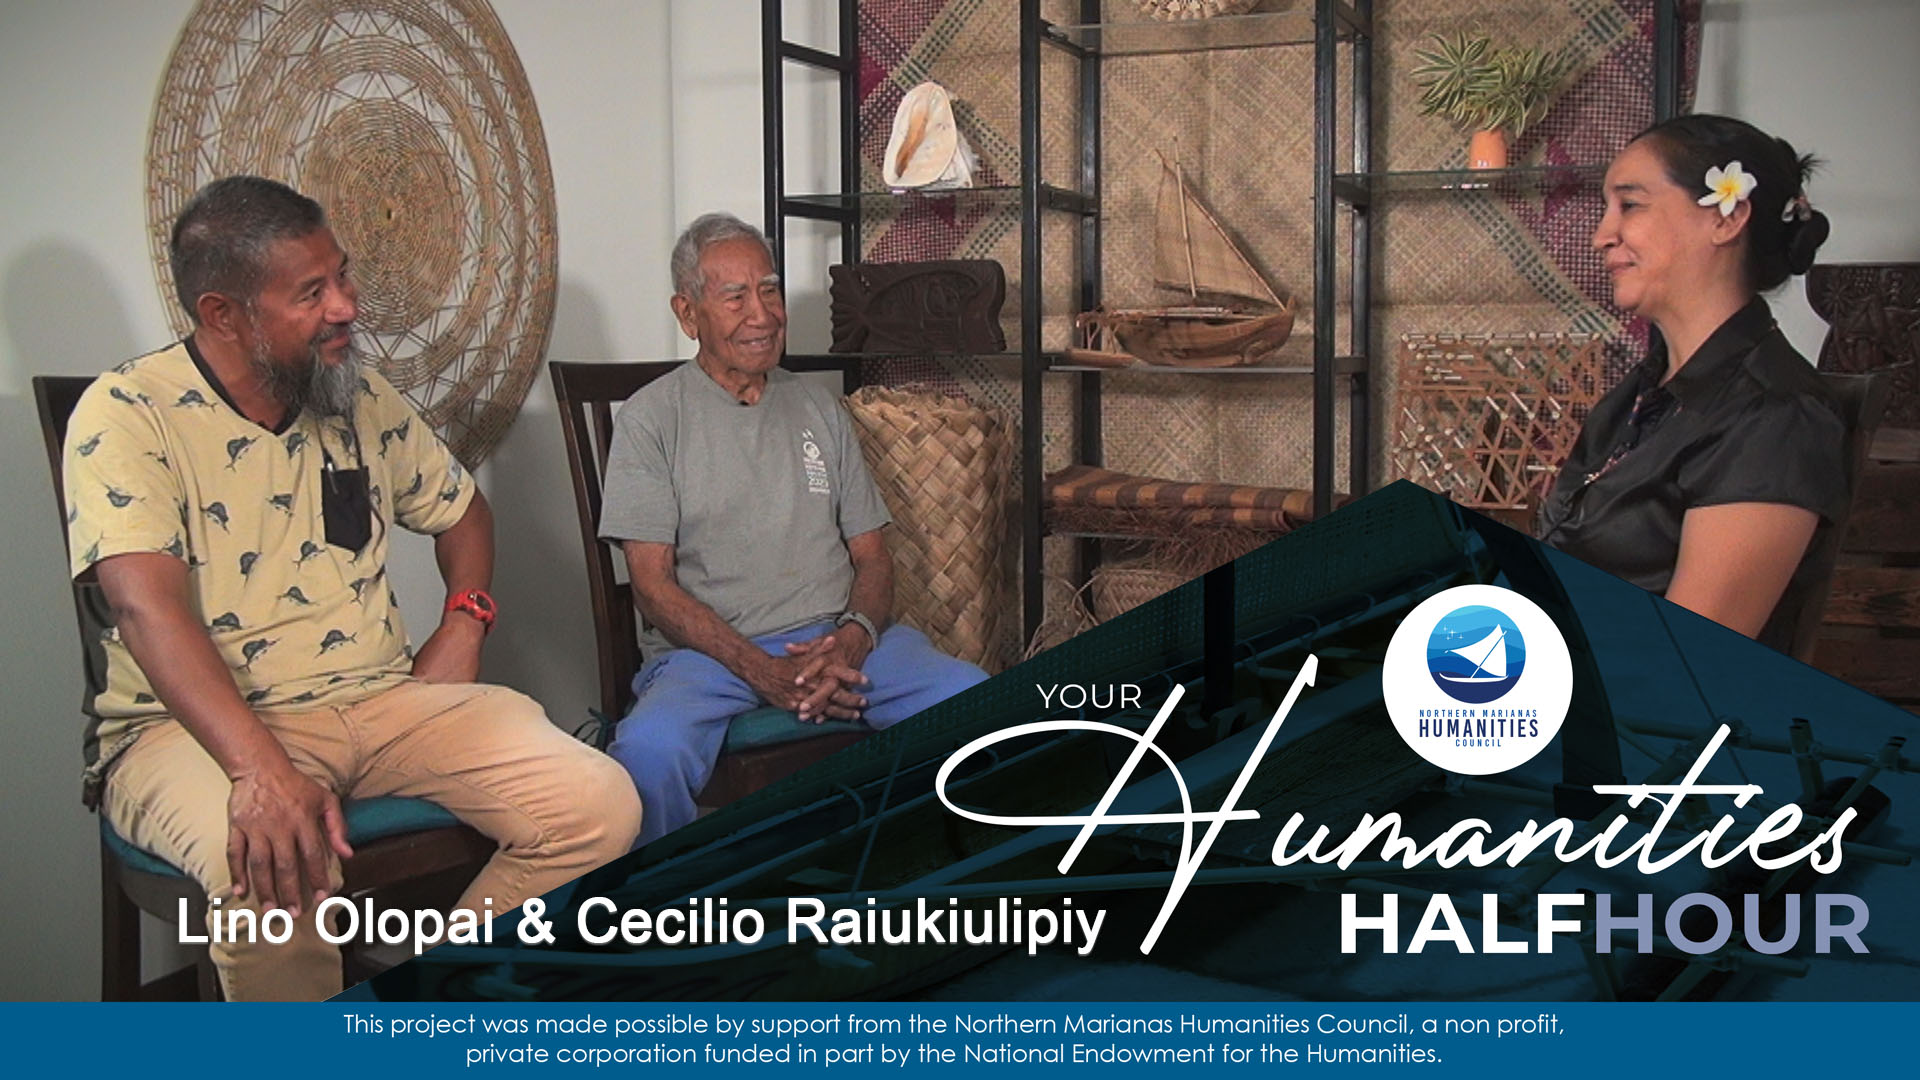 Lino Olopai & Cecilio Raiukiulipiy-The matrilineal clan system of the indigenous Carolinians!